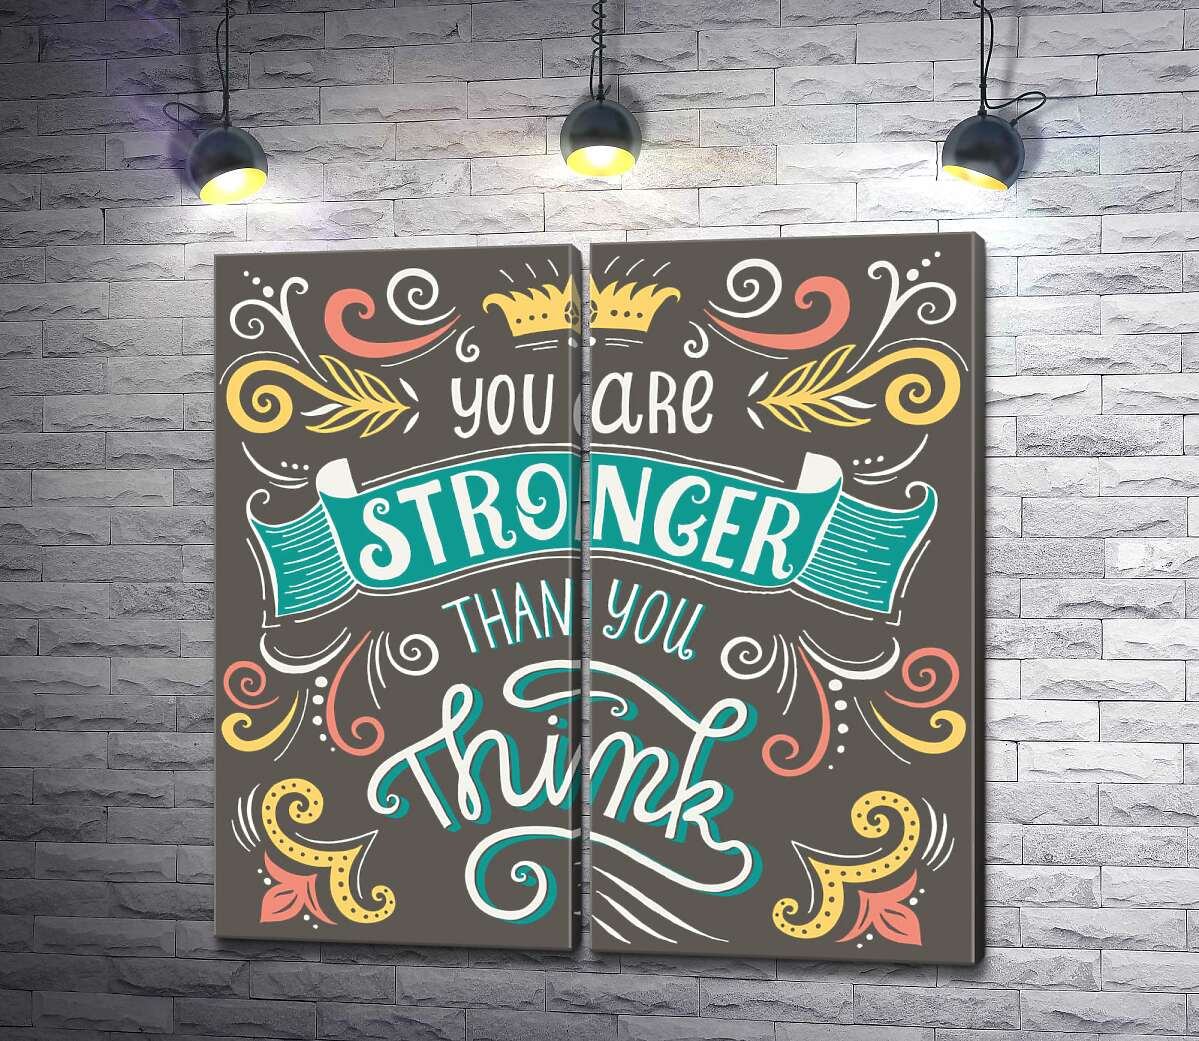 модульная картина Фраза "you are stronger than you think" с цветочными узорами